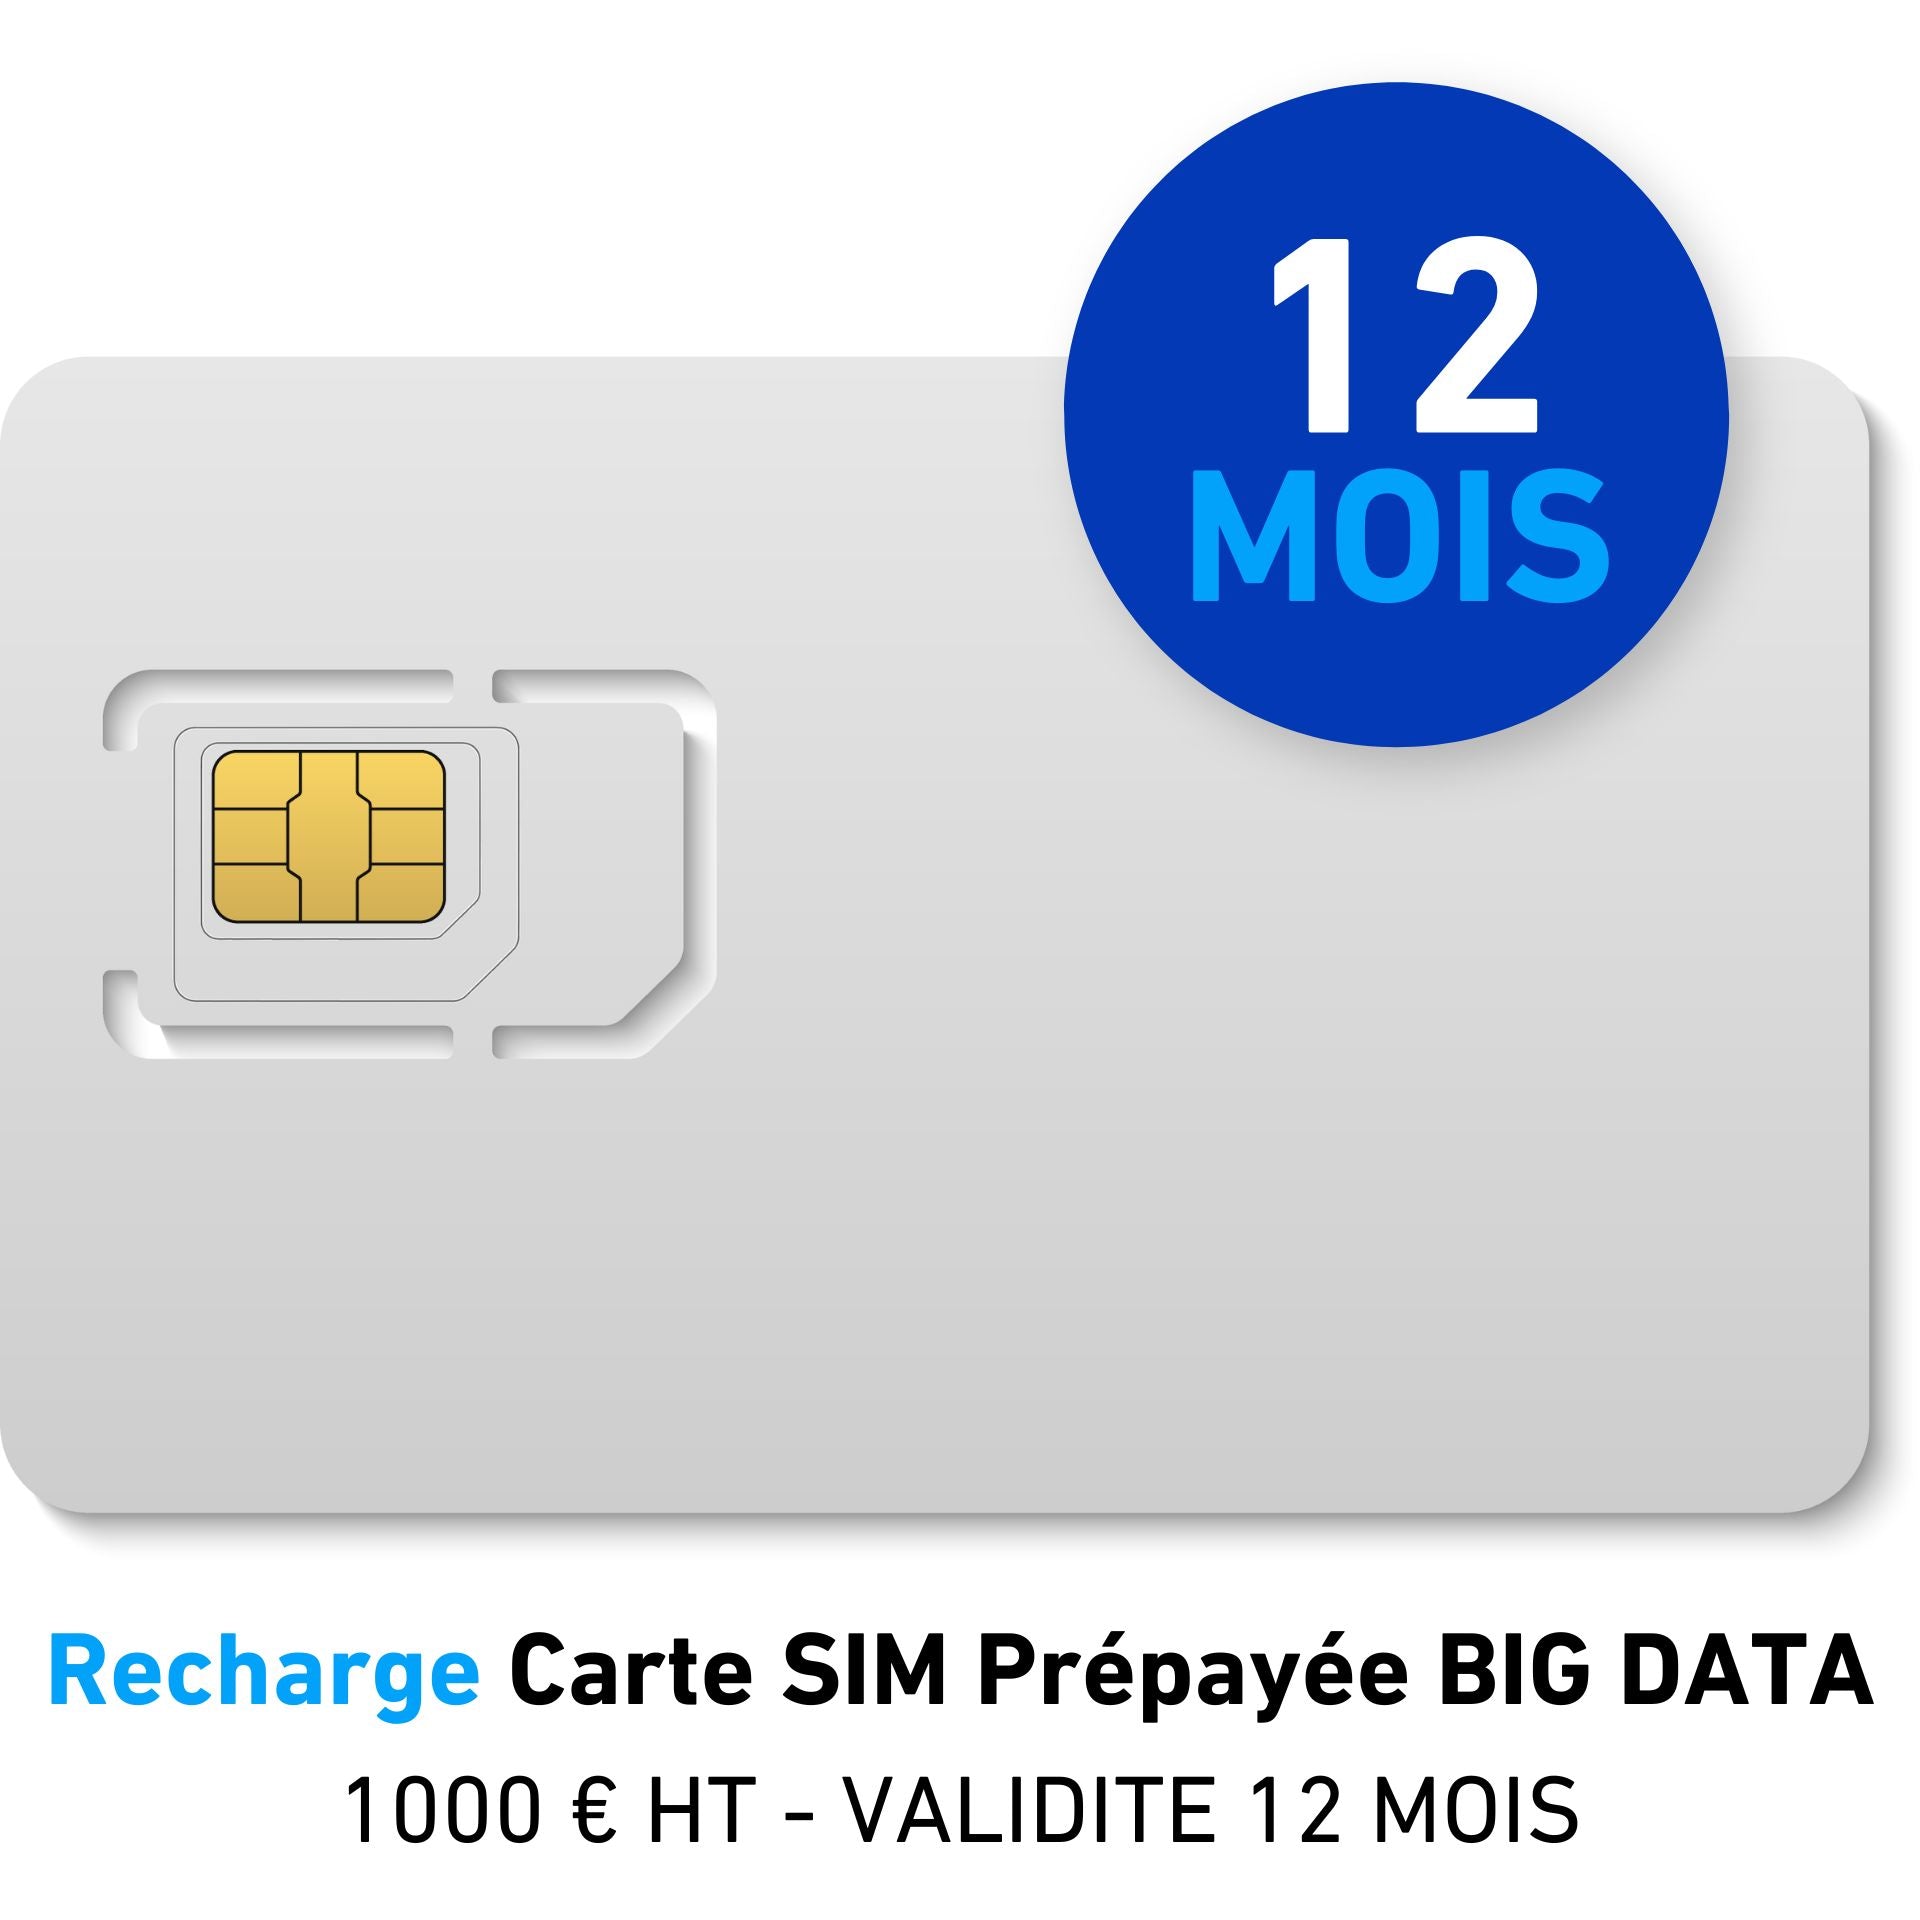 Recarga de tarjeta SIM de prepago Grandes Datos 1000 € HT - VALIDEZ 12 MESES